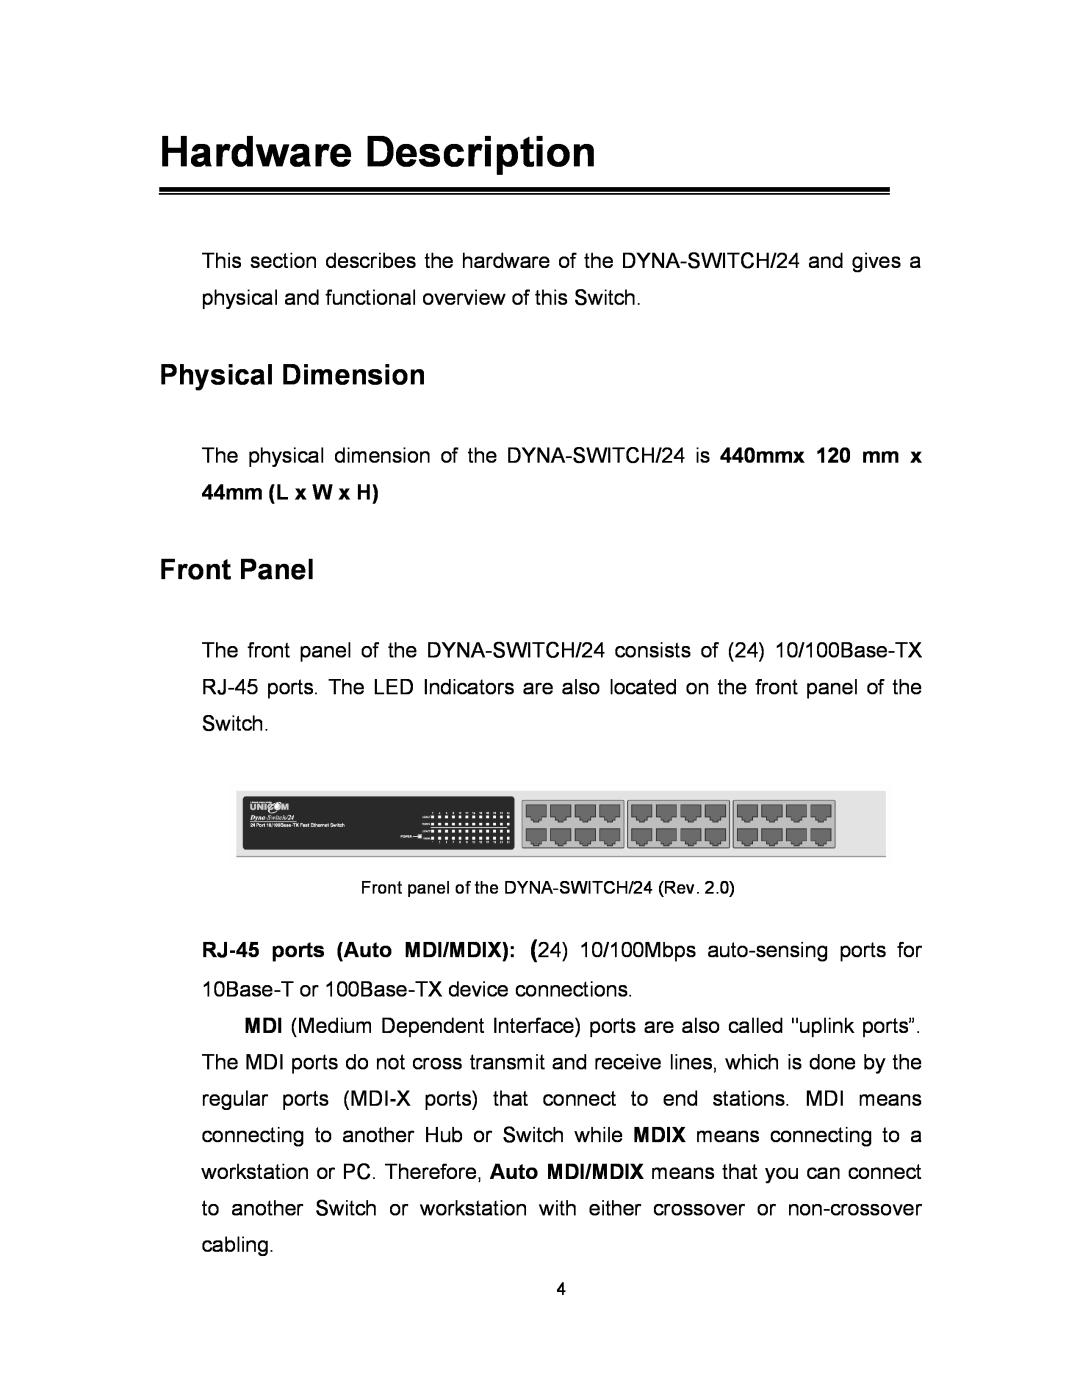 UNICOM Electric fep-31024t-2 specifications Hardware Description, Physical Dimension, Front Panel 